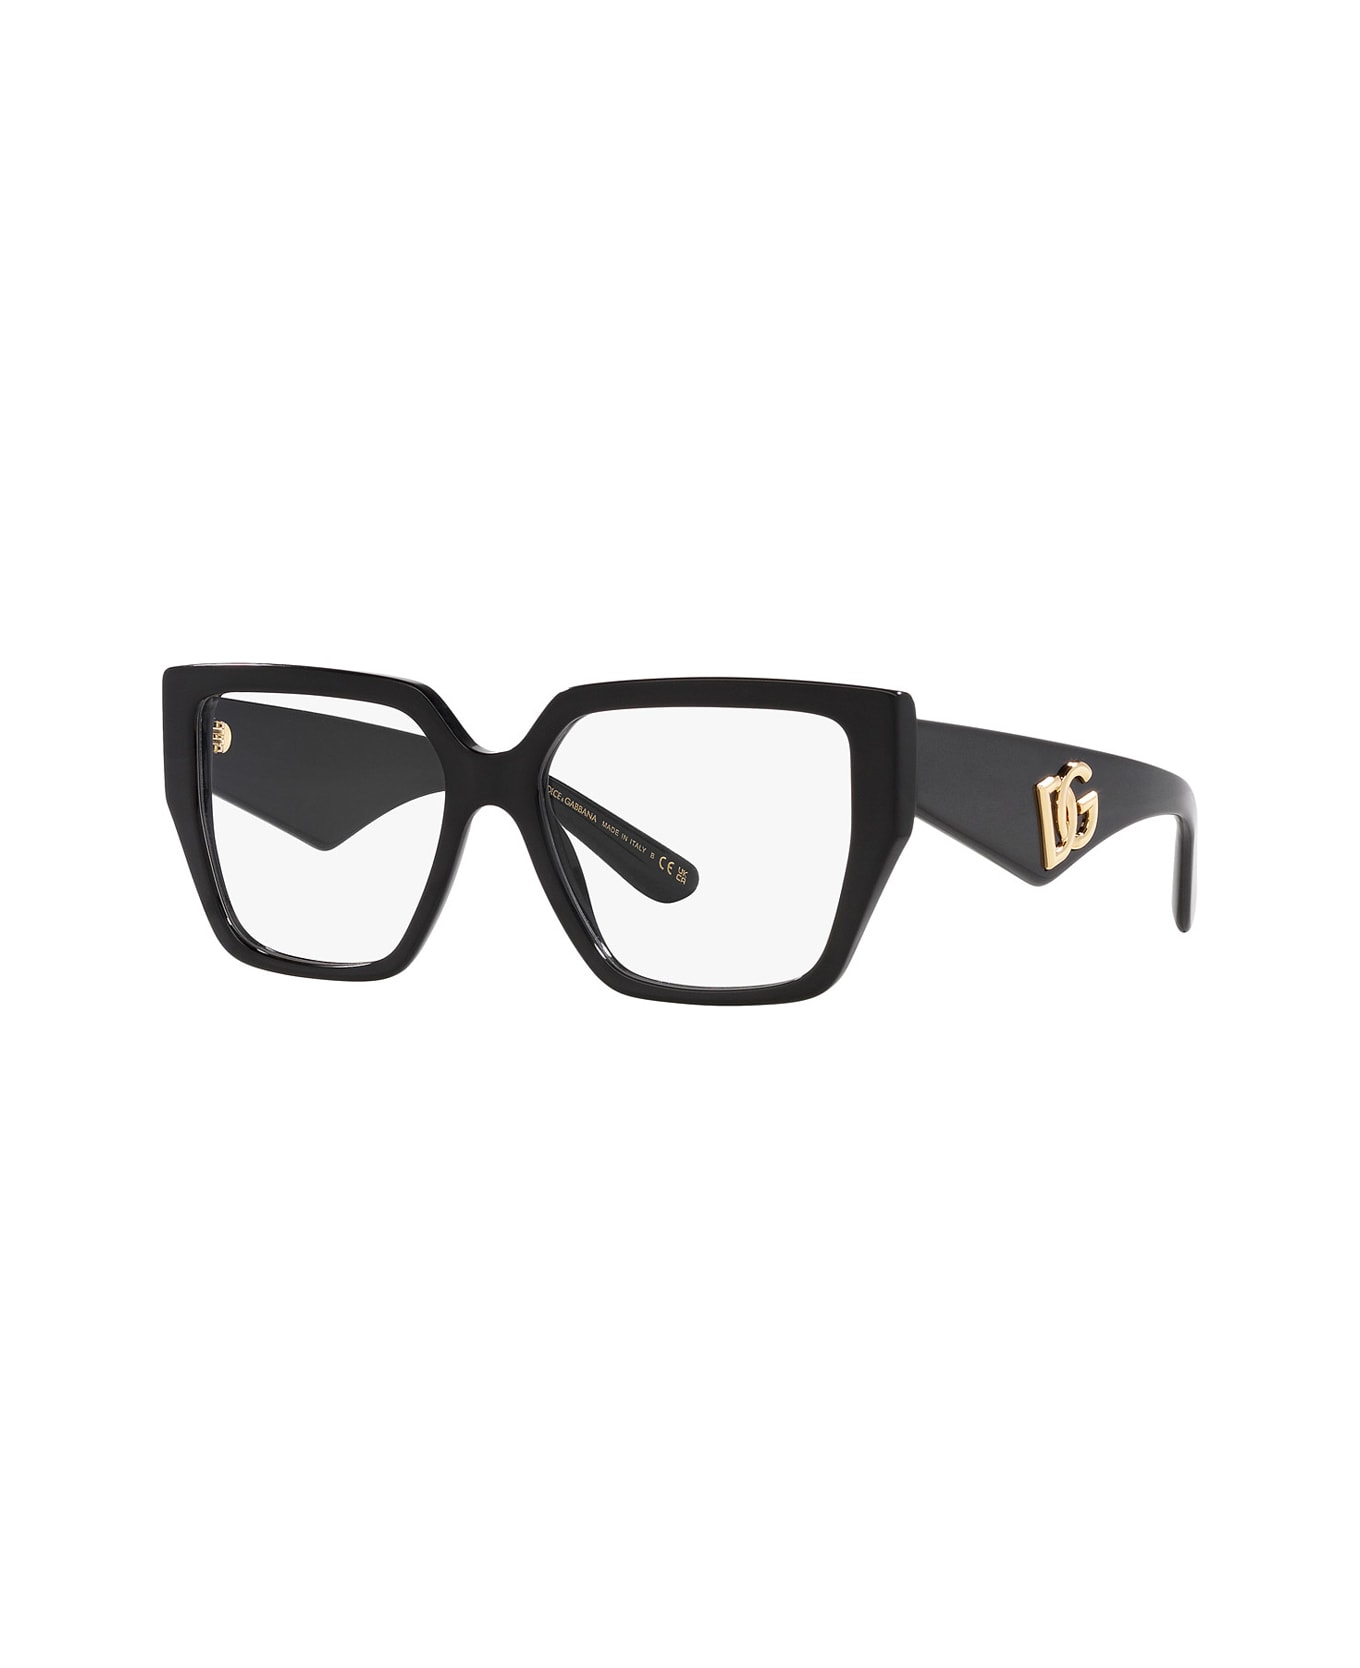 Dolce & Gabbana Eyewear Dg3373 501 Glasses - Nero アイウェア